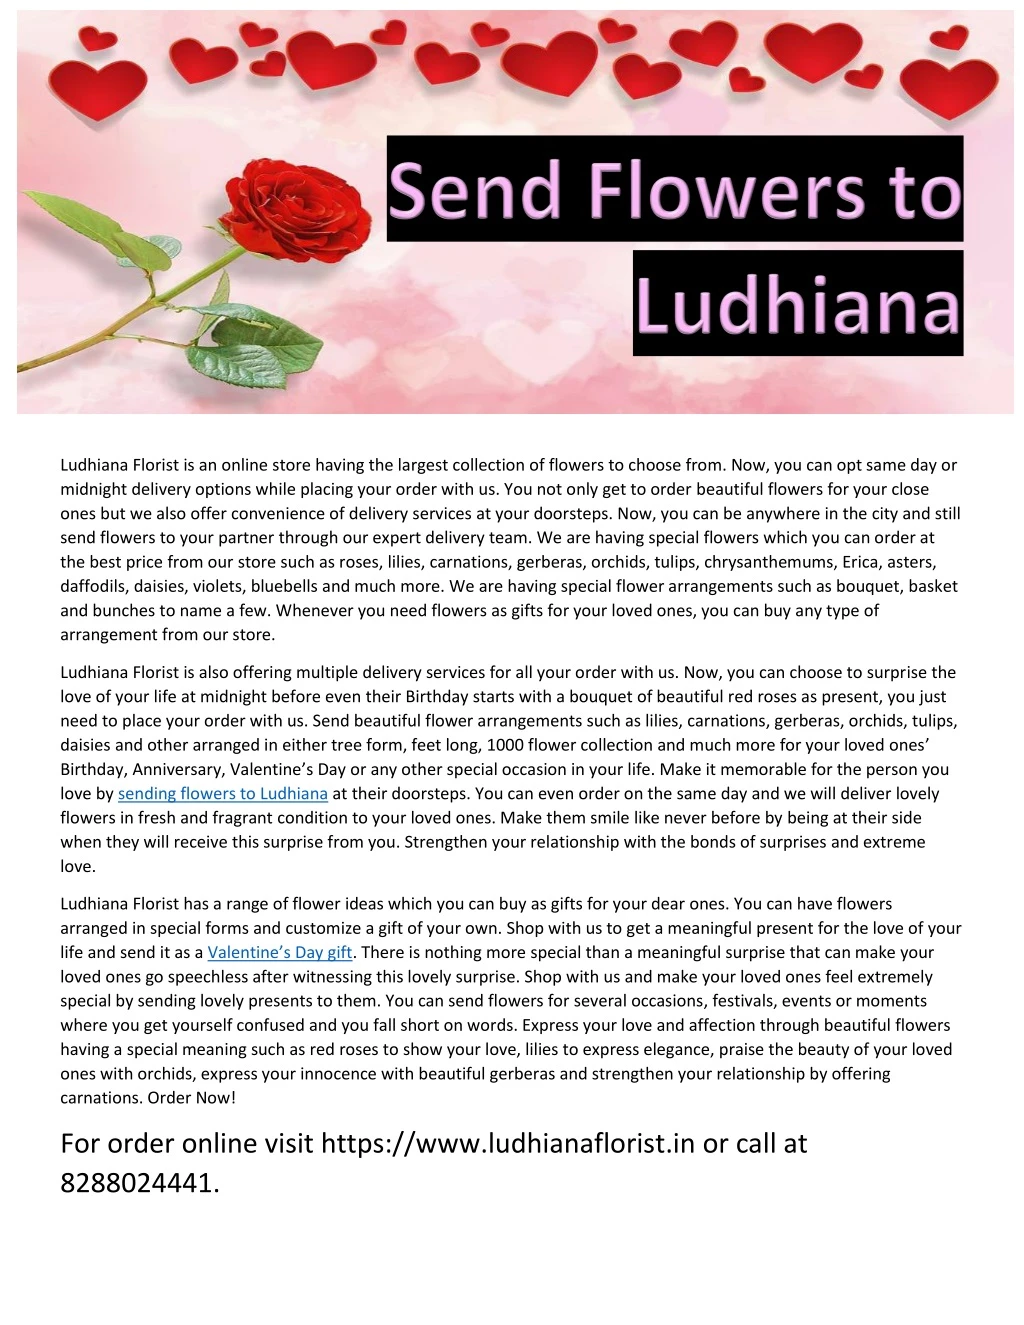 ludhiana florist is an online store having